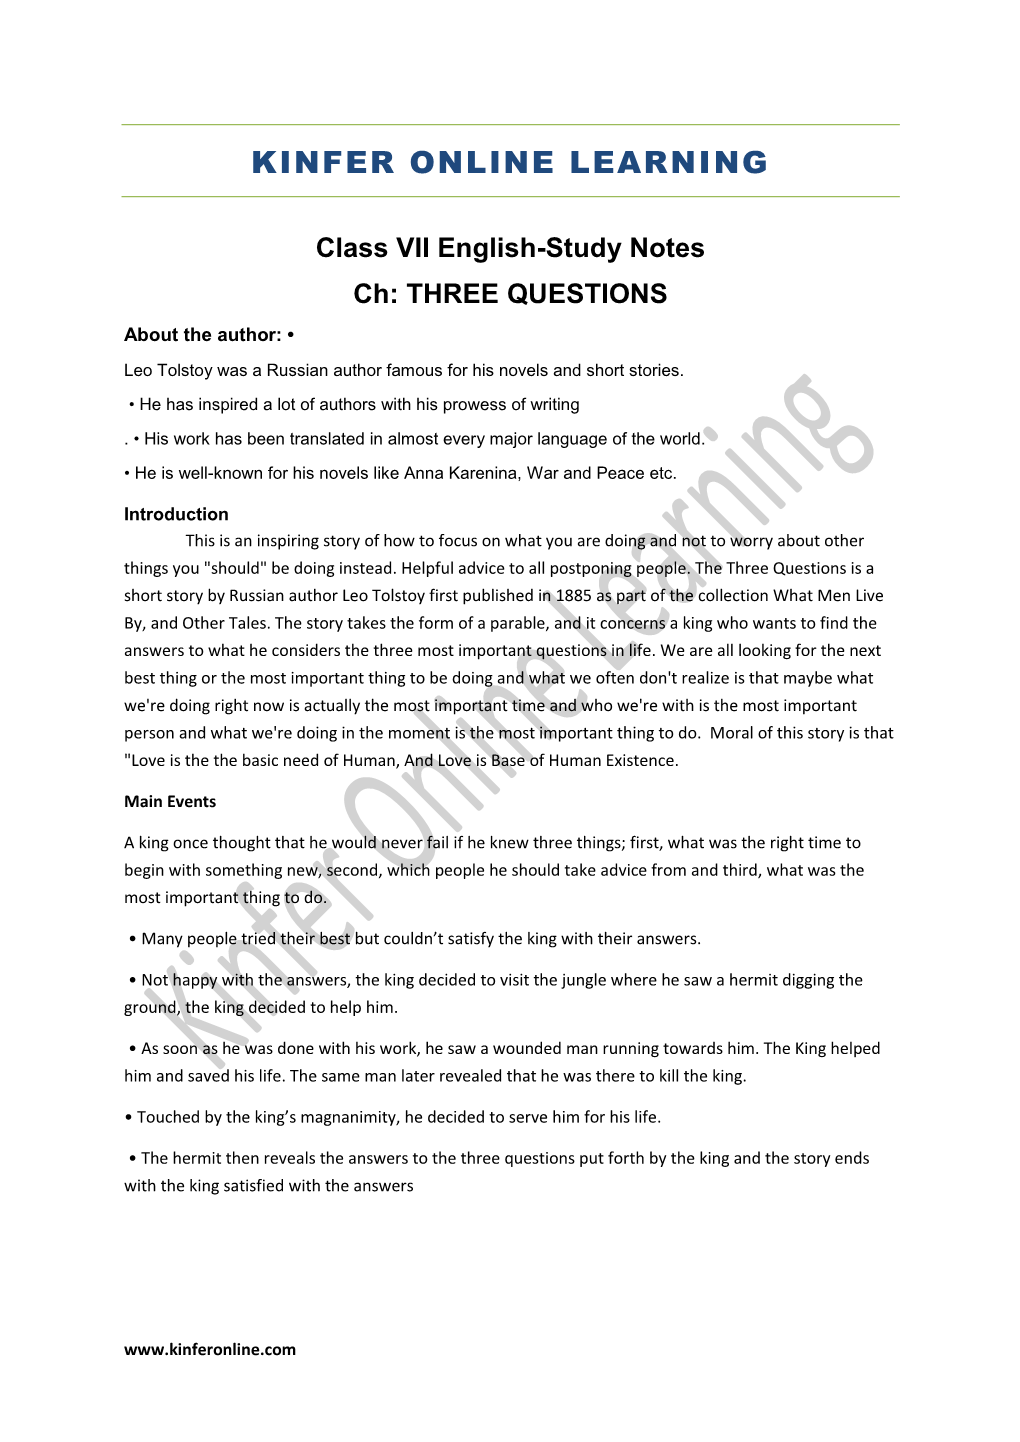 CBSE Class 7 English Study Notes